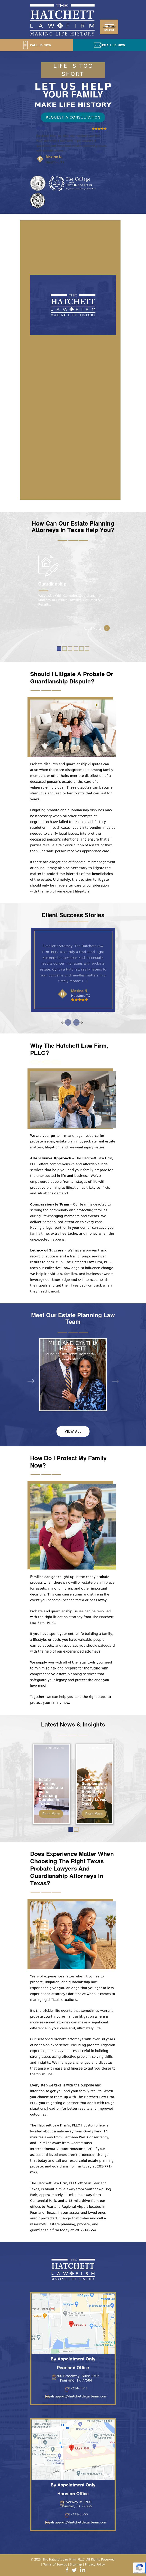 The Hatchett Law Firm - Houston TX Lawyers